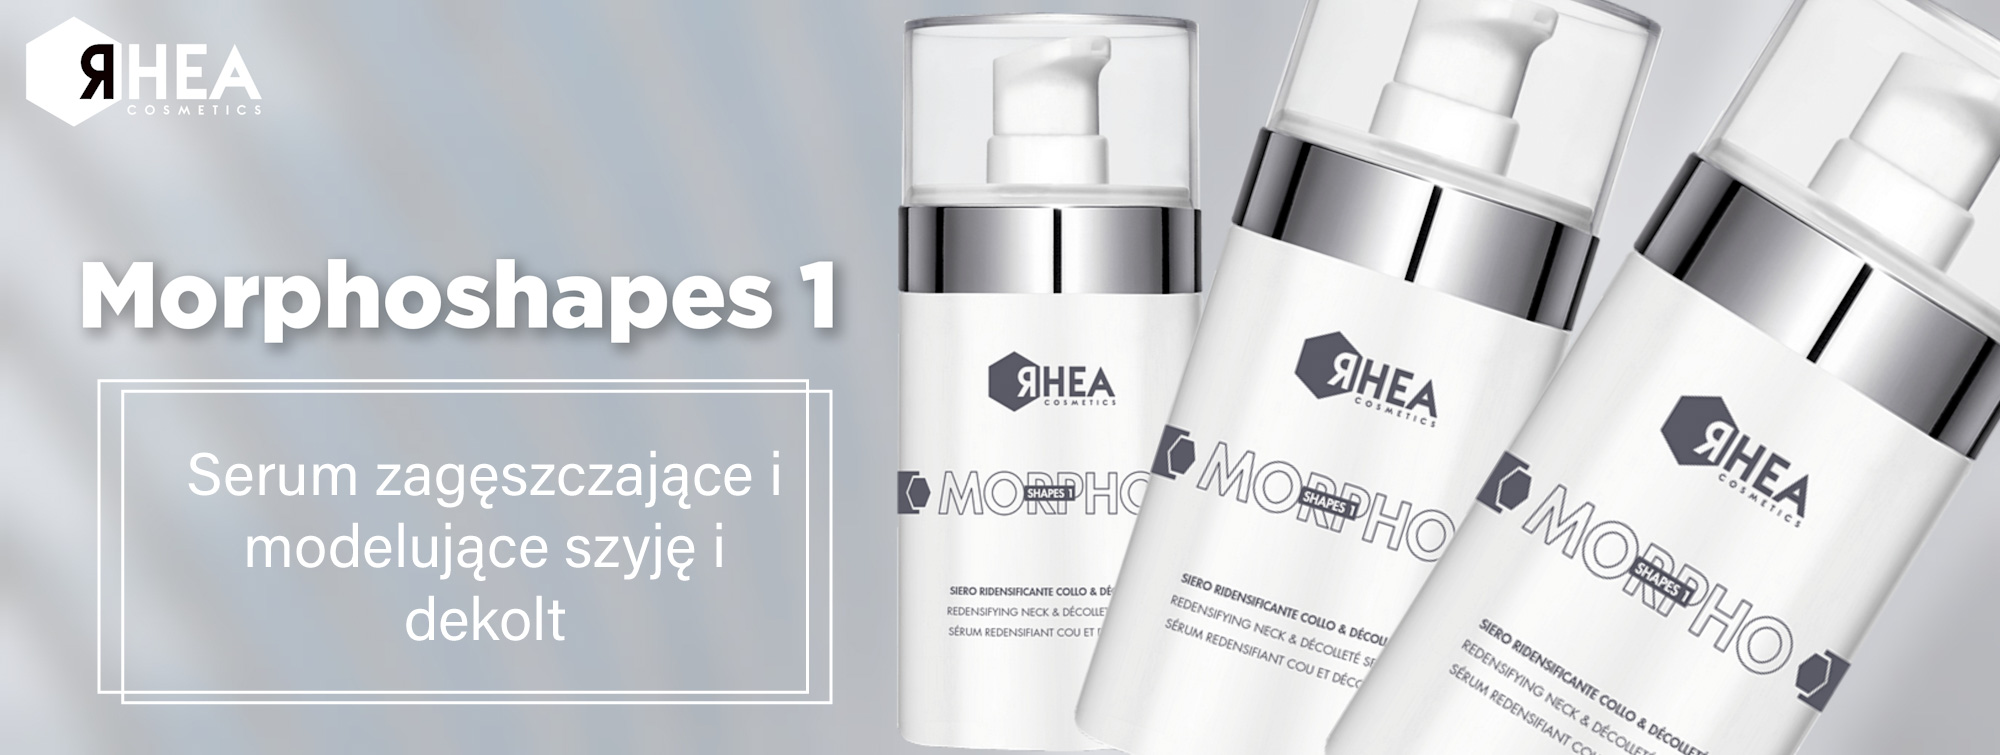 Rhea Cosmetics MorphoShapes 1